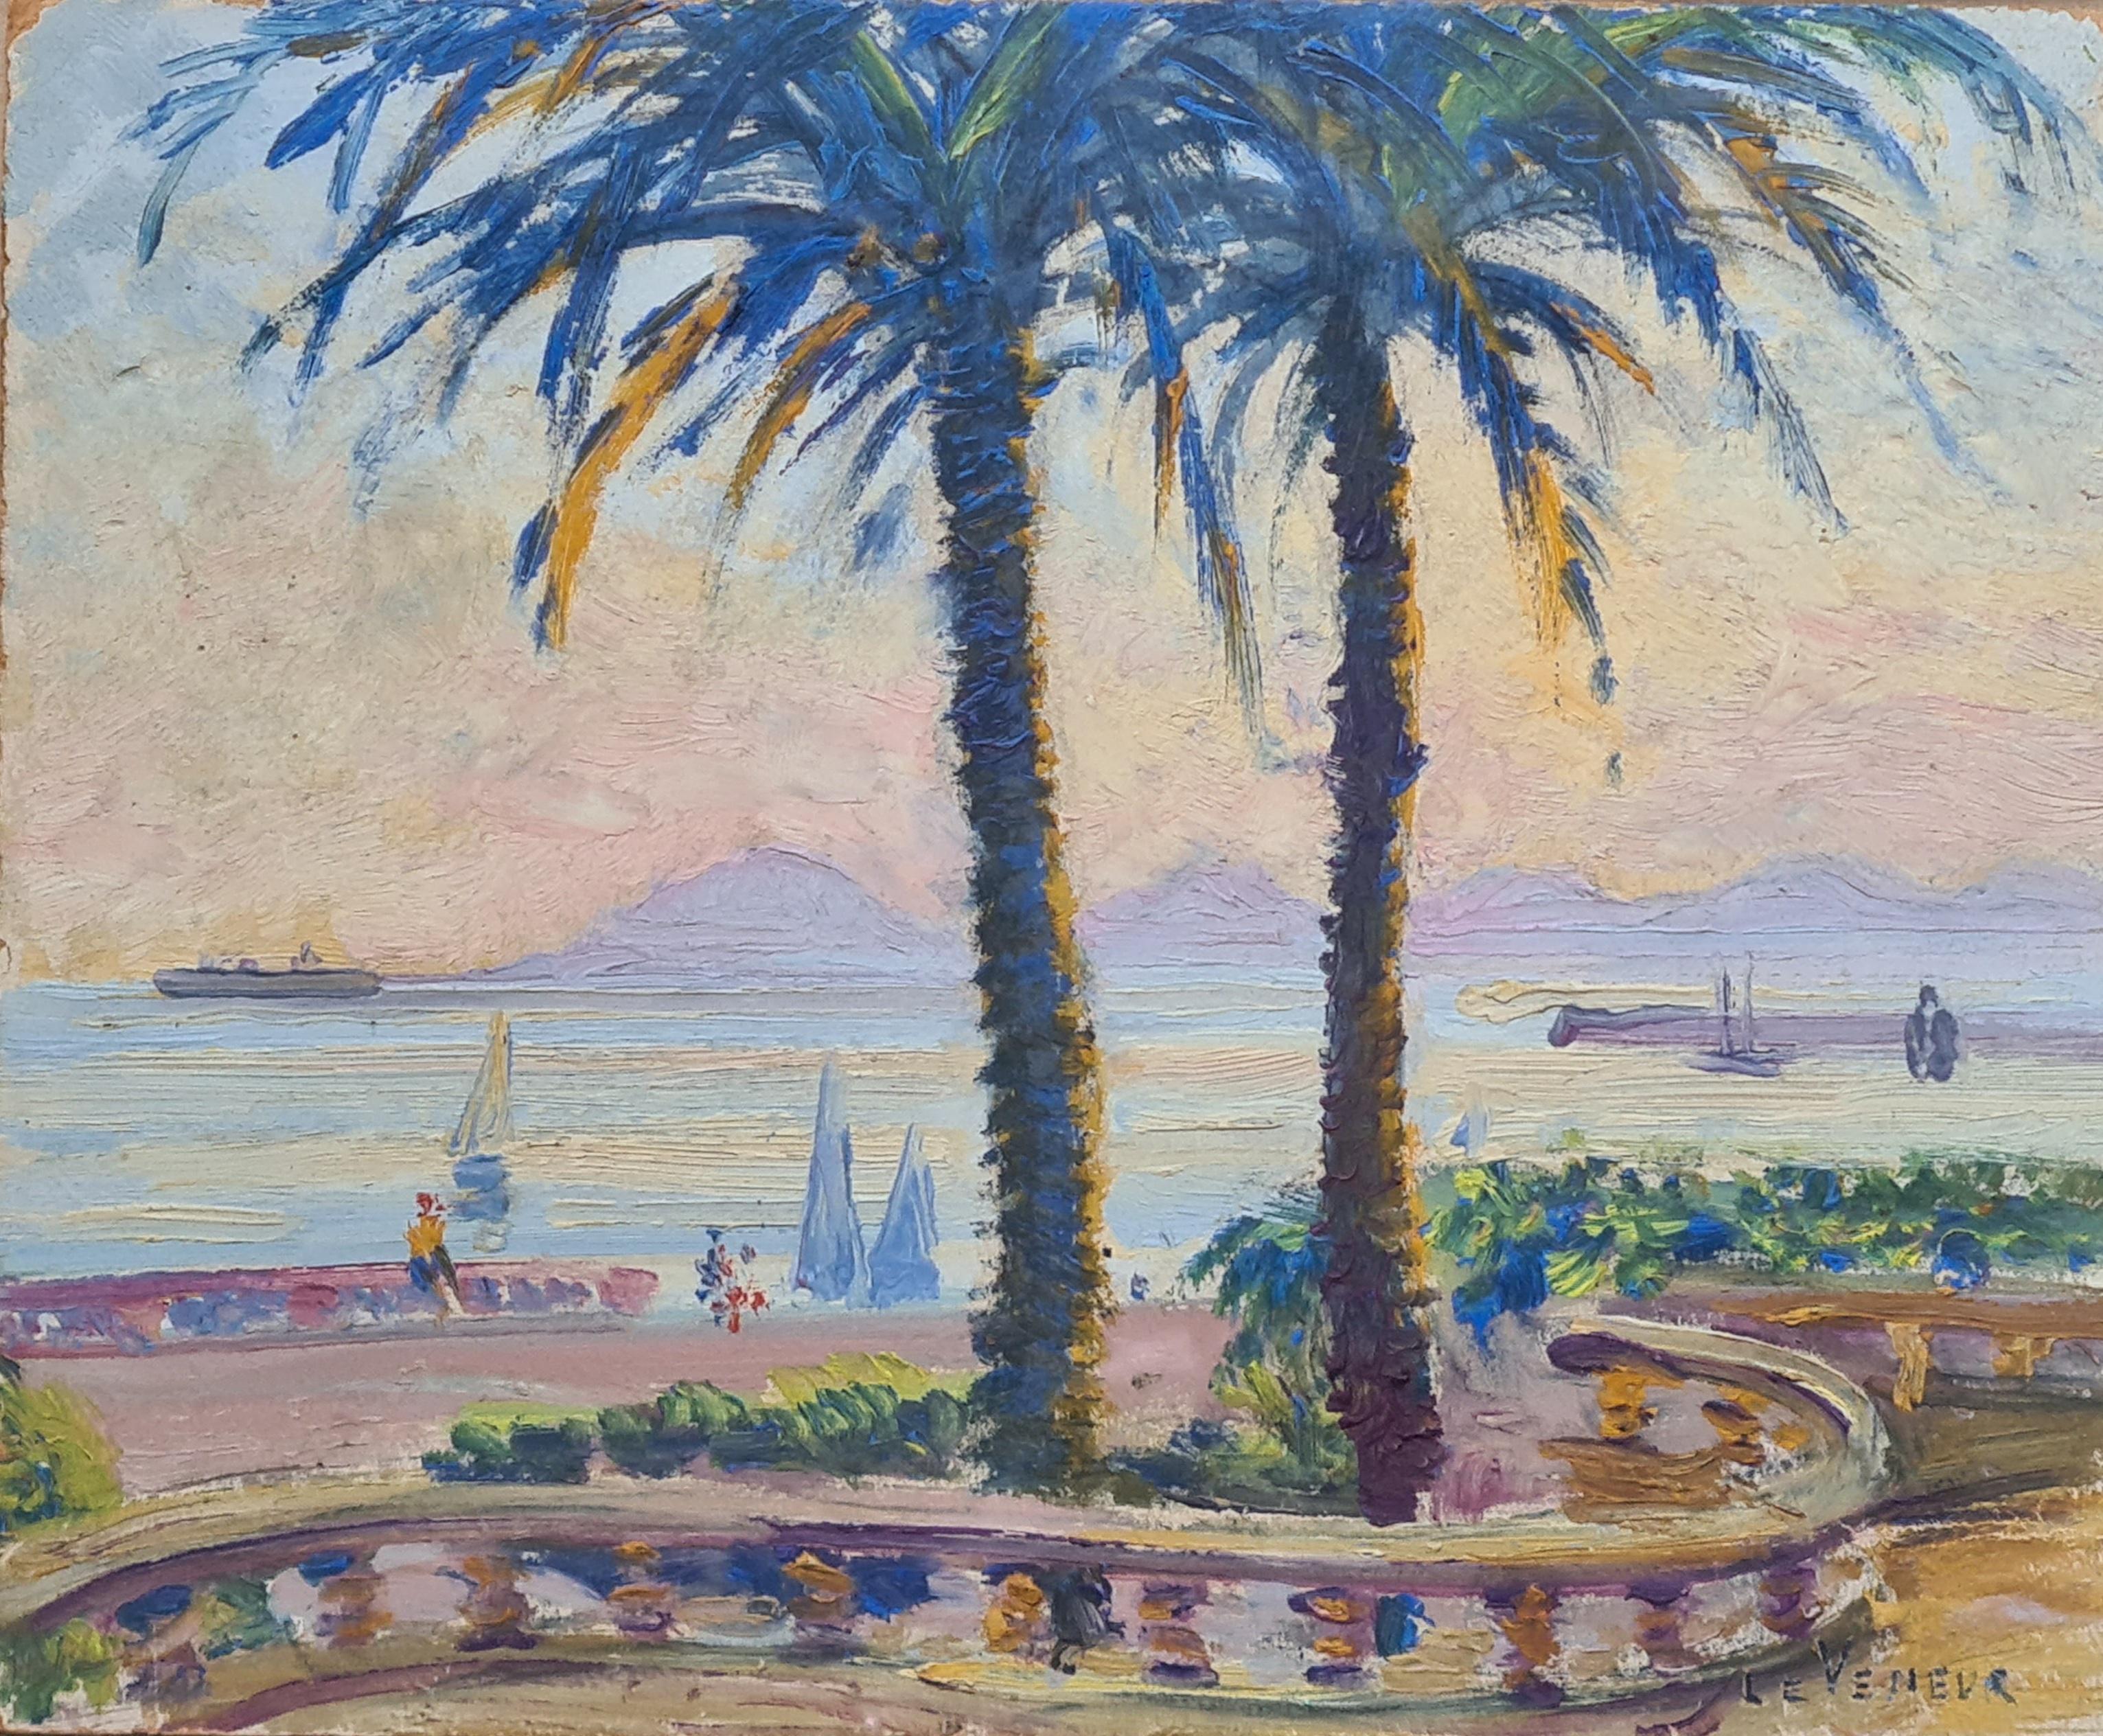 La Croisette, Cannes, French Oil on Board Seascape - Painting by Robert Auguste Jaeger aka Le Veneur